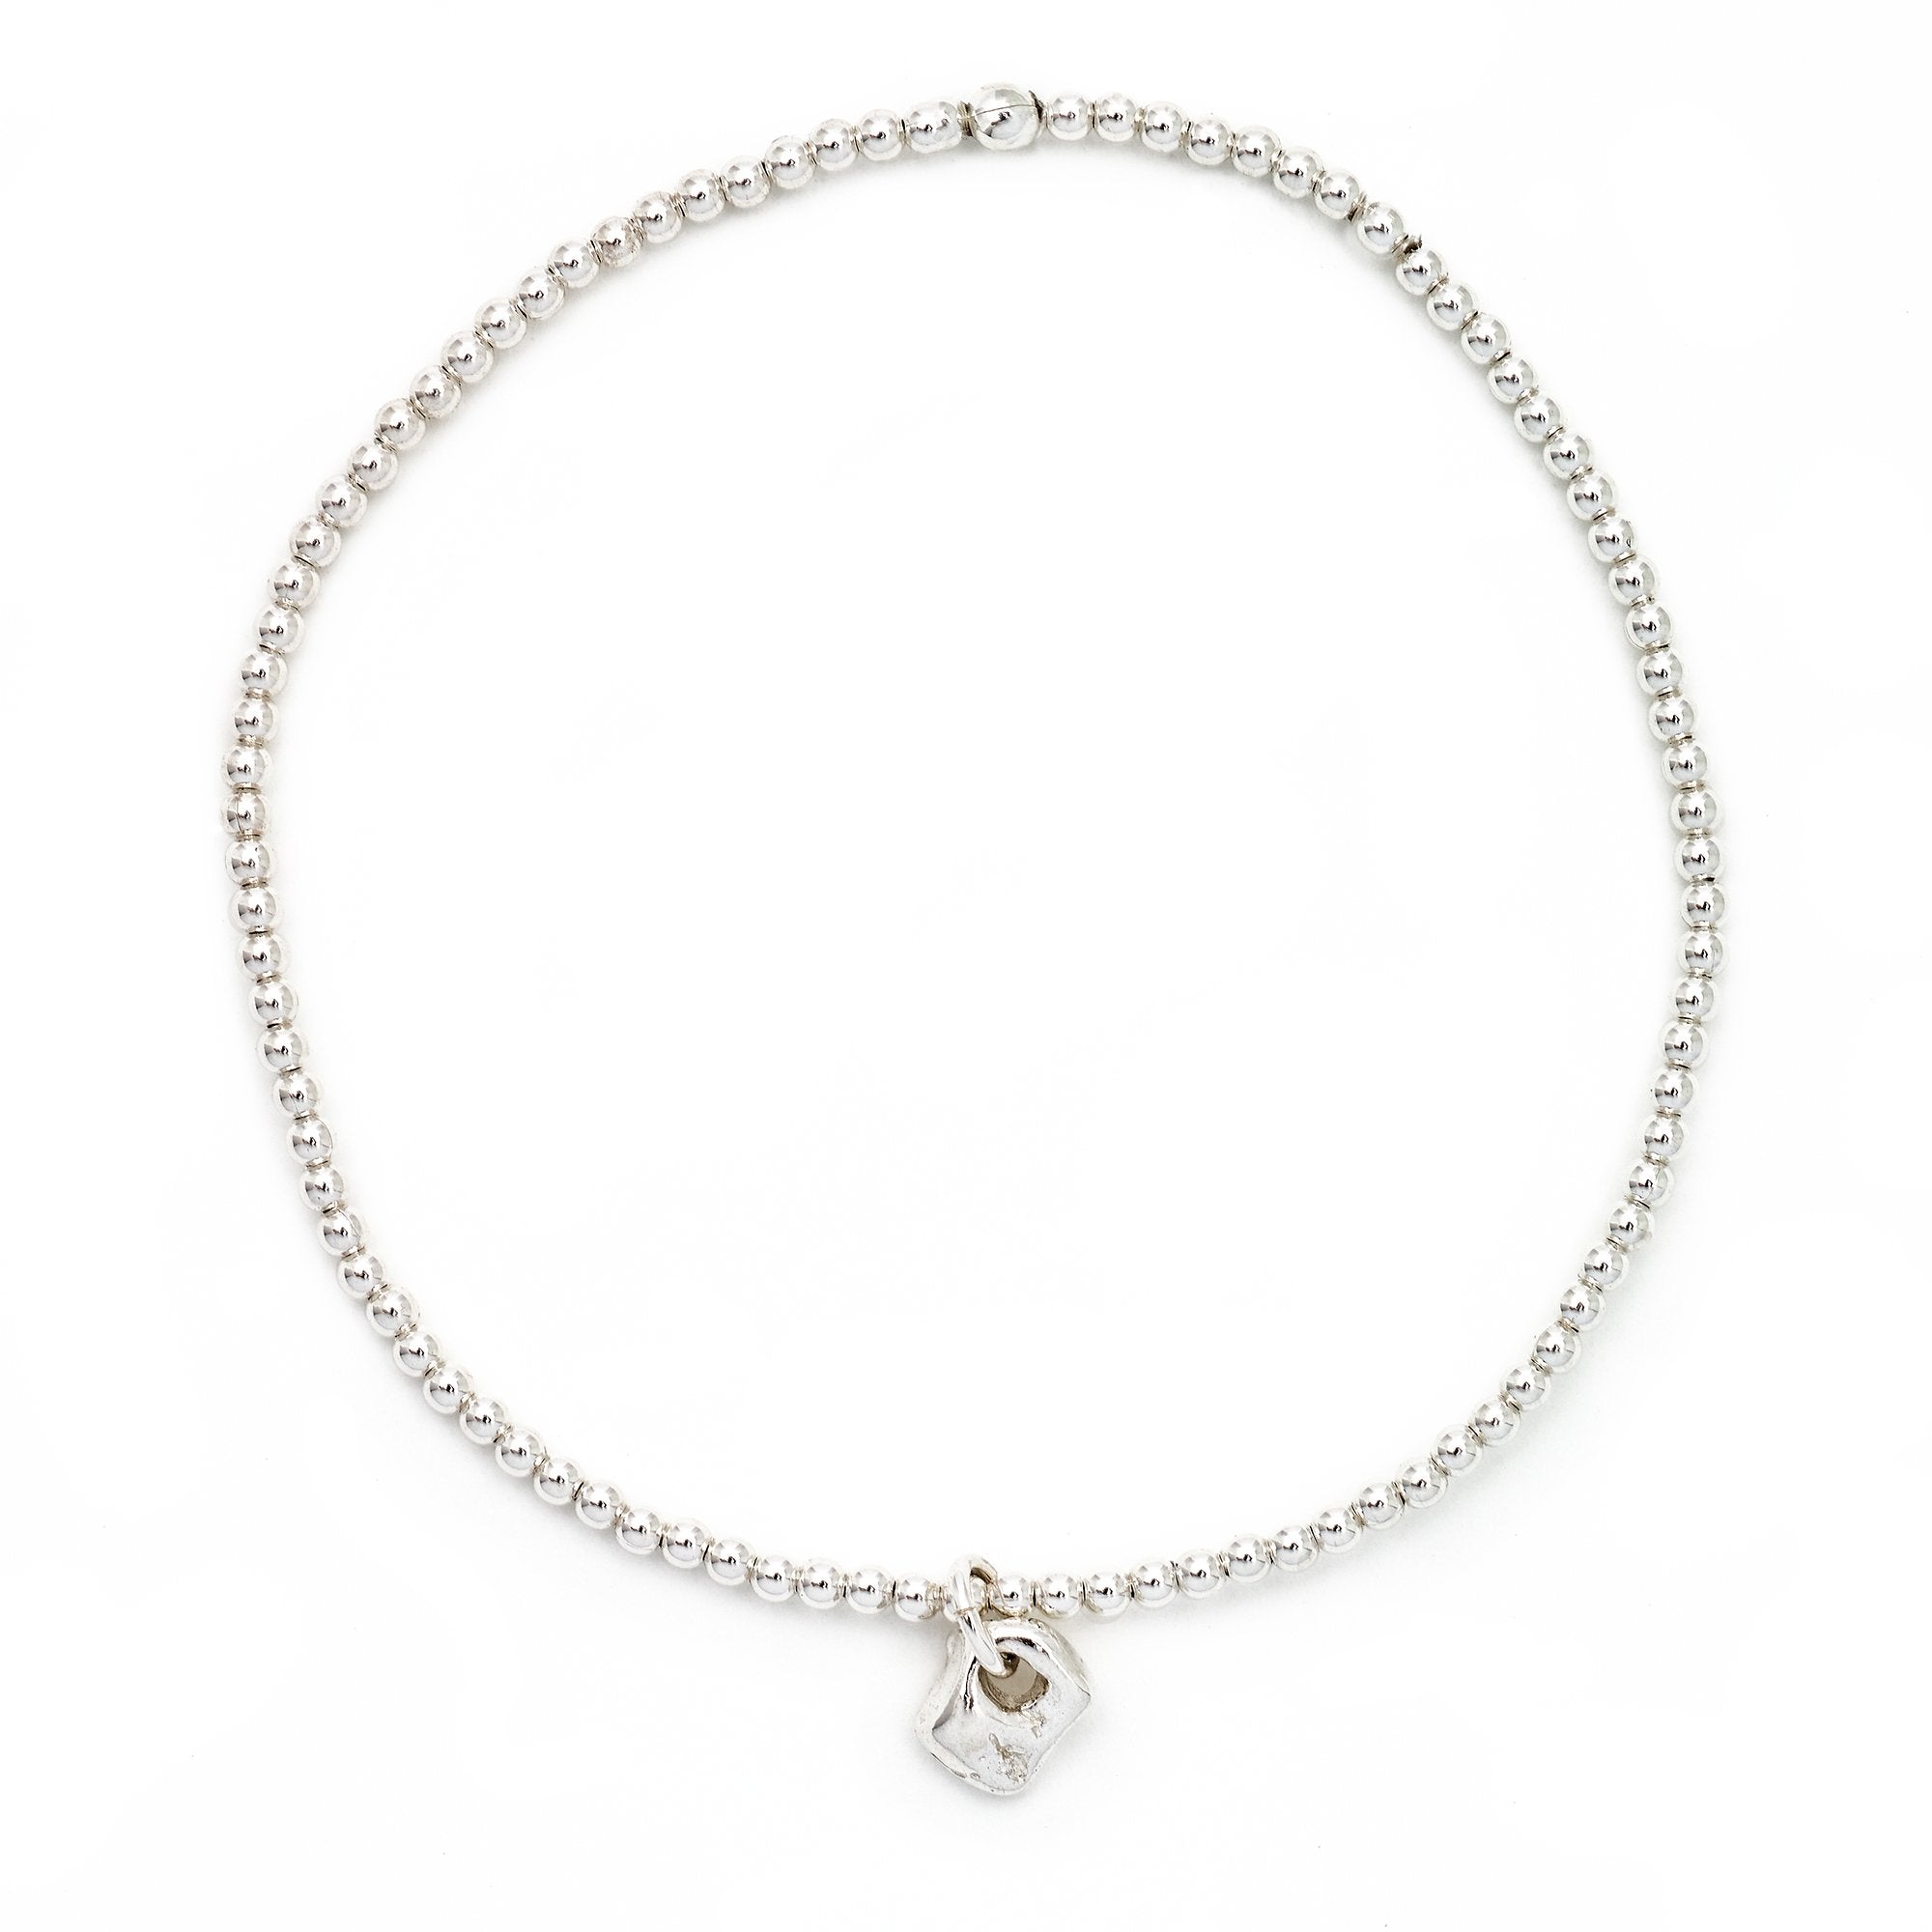 Stretchy Silver Baby Bracelet - Magpie Jewellery